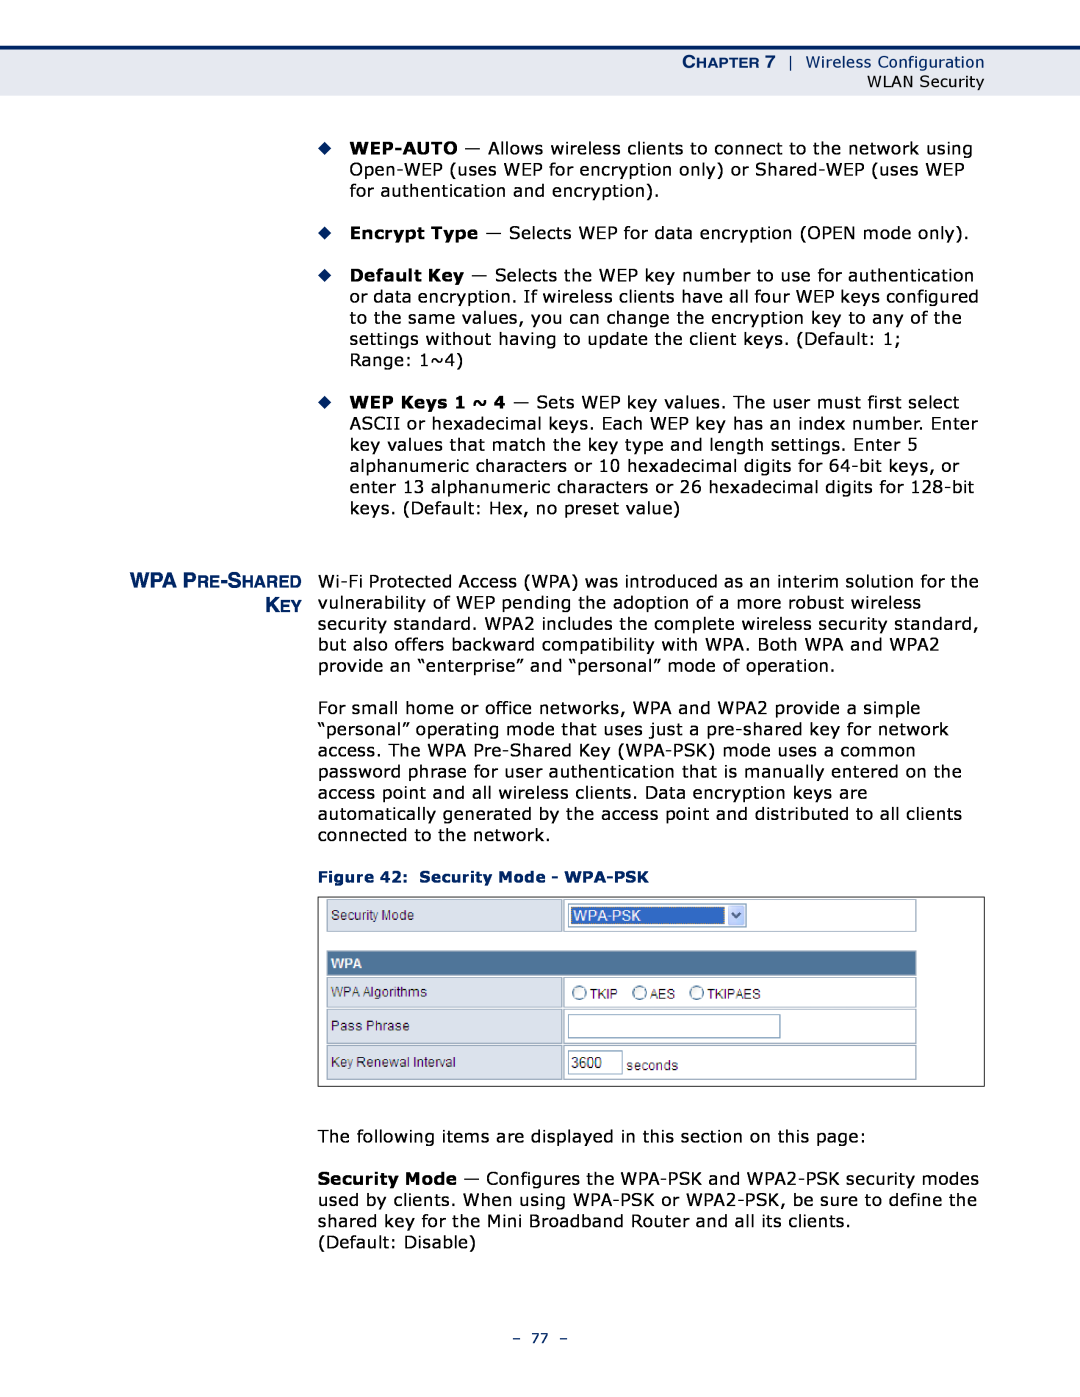 SMC Networks SMCWBR11S-N manual Wpa Pre-Shared Key, Security Mode - WPA-PSK 